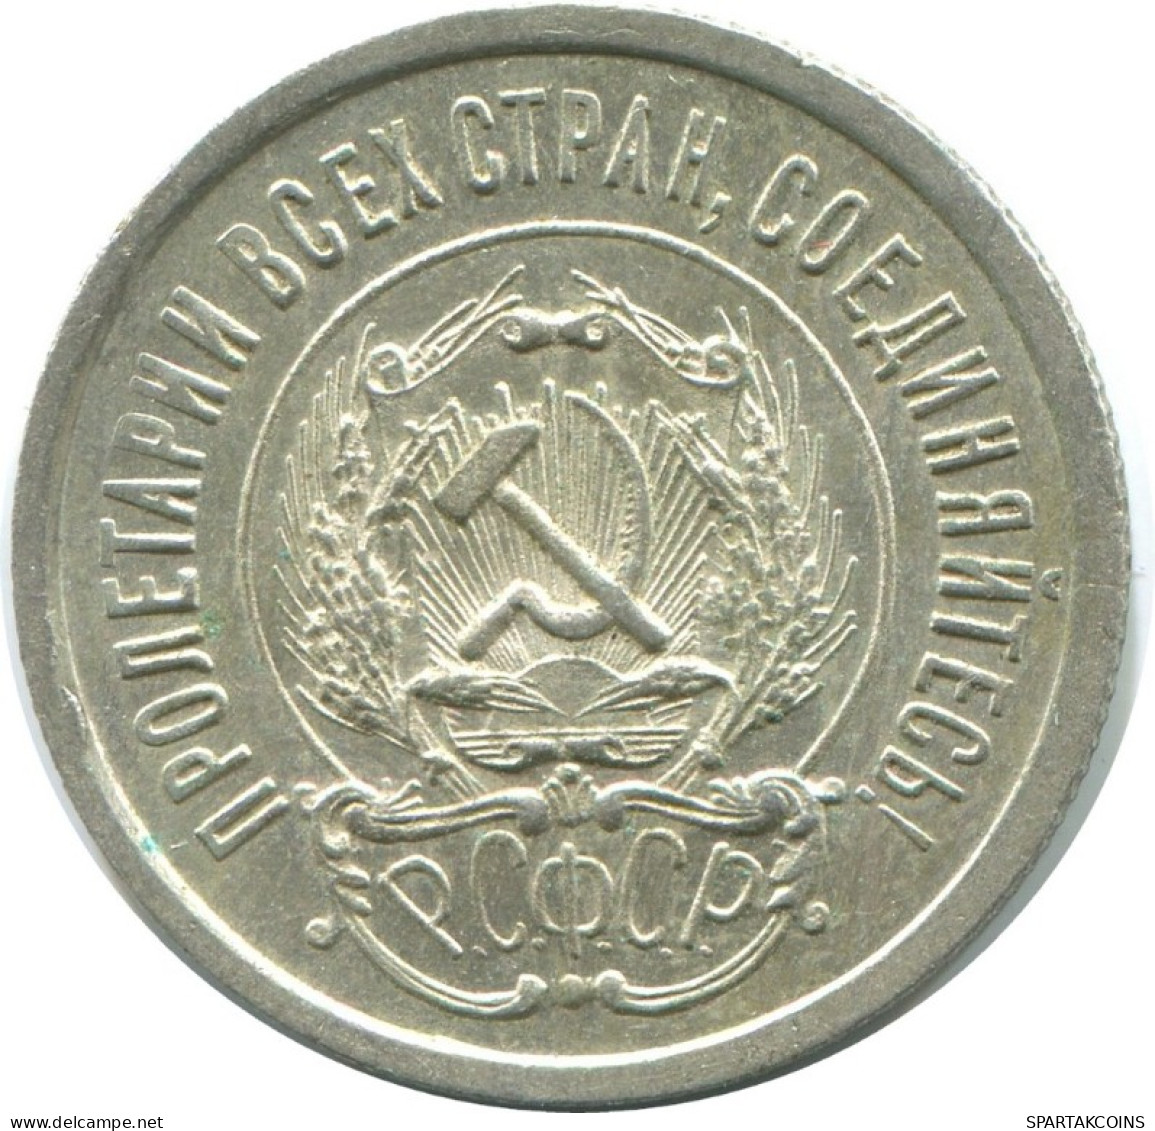 20 KOPEKS 1923 RUSSIA RSFSR SILVER Coin HIGH GRADE #AF617.U.A - Russia